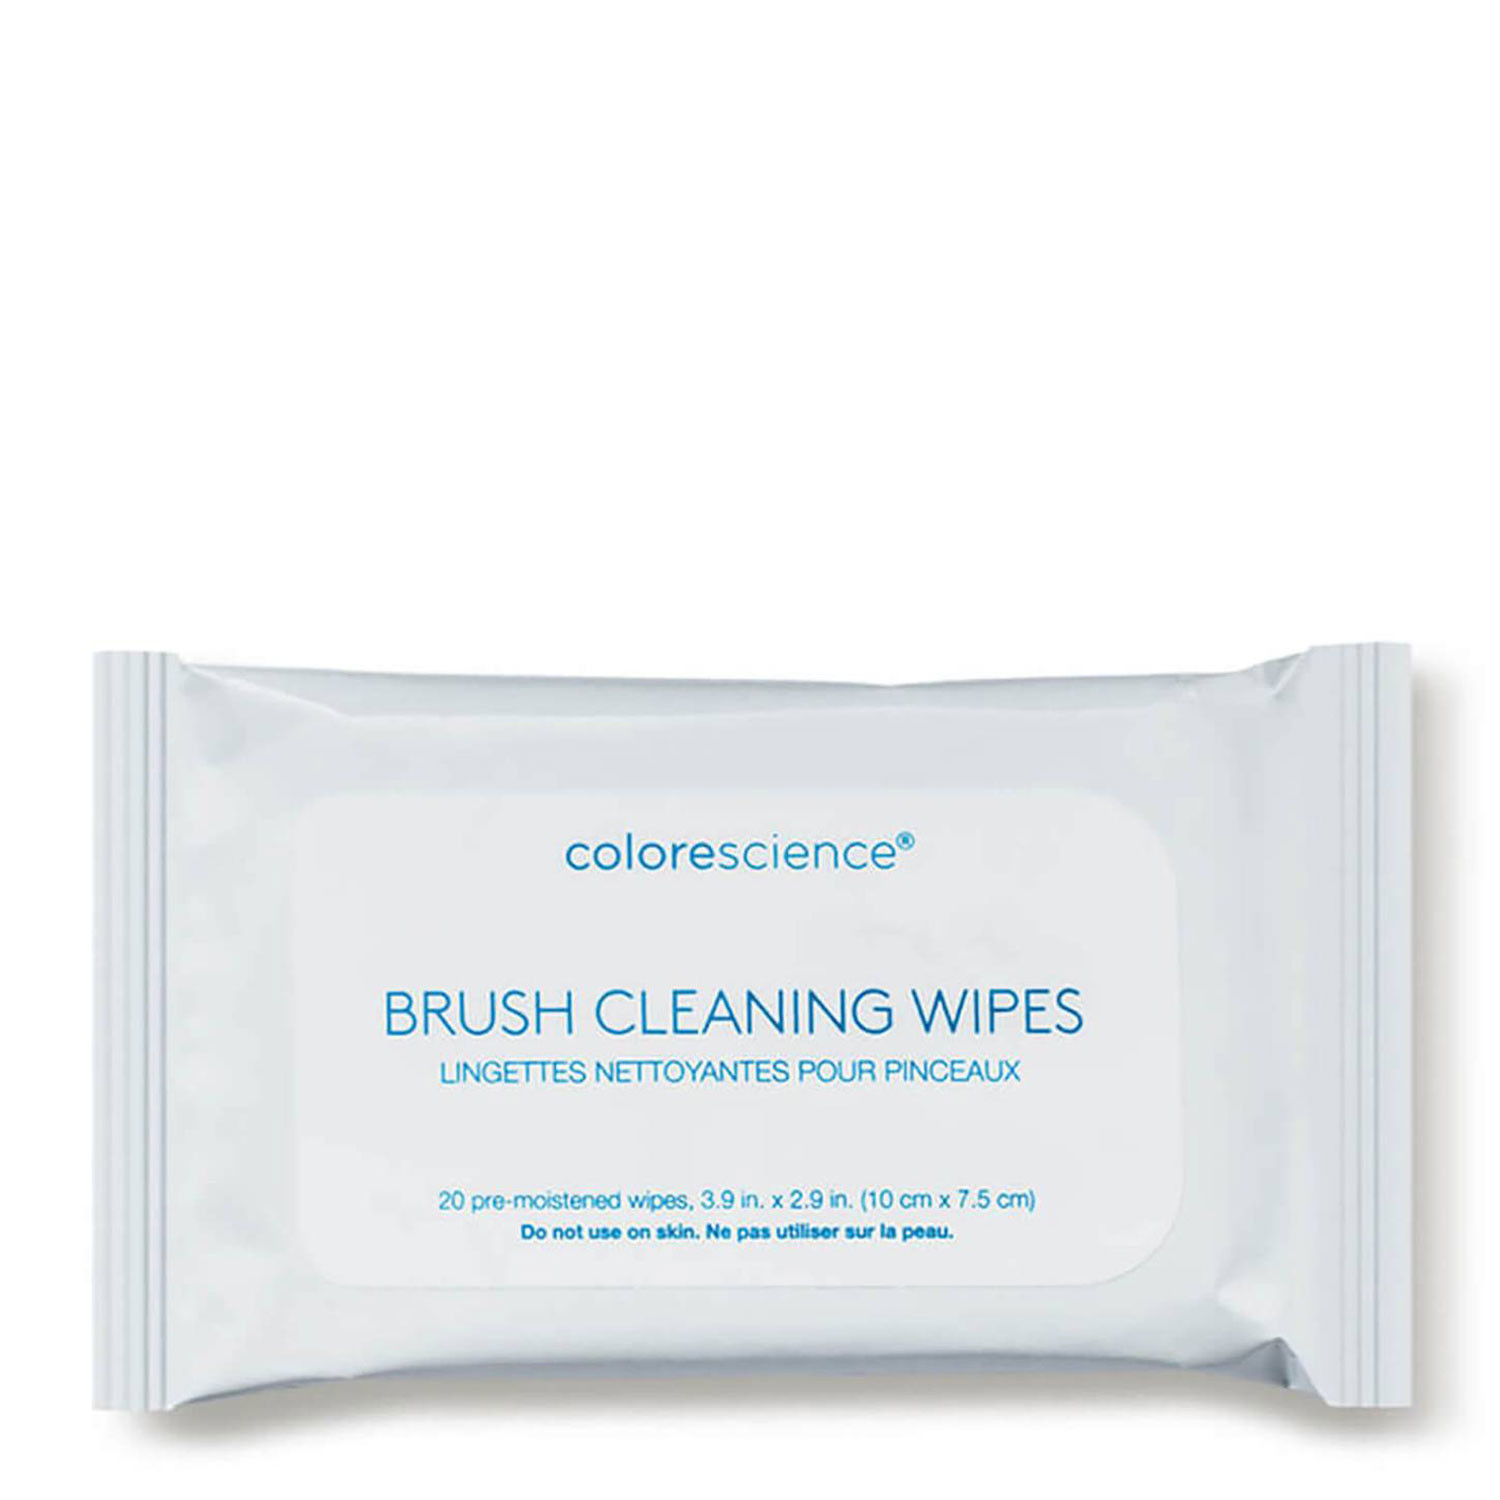 Colorescience Brush Cleaning Wipes Салфетки для очистки кистей для макияжа